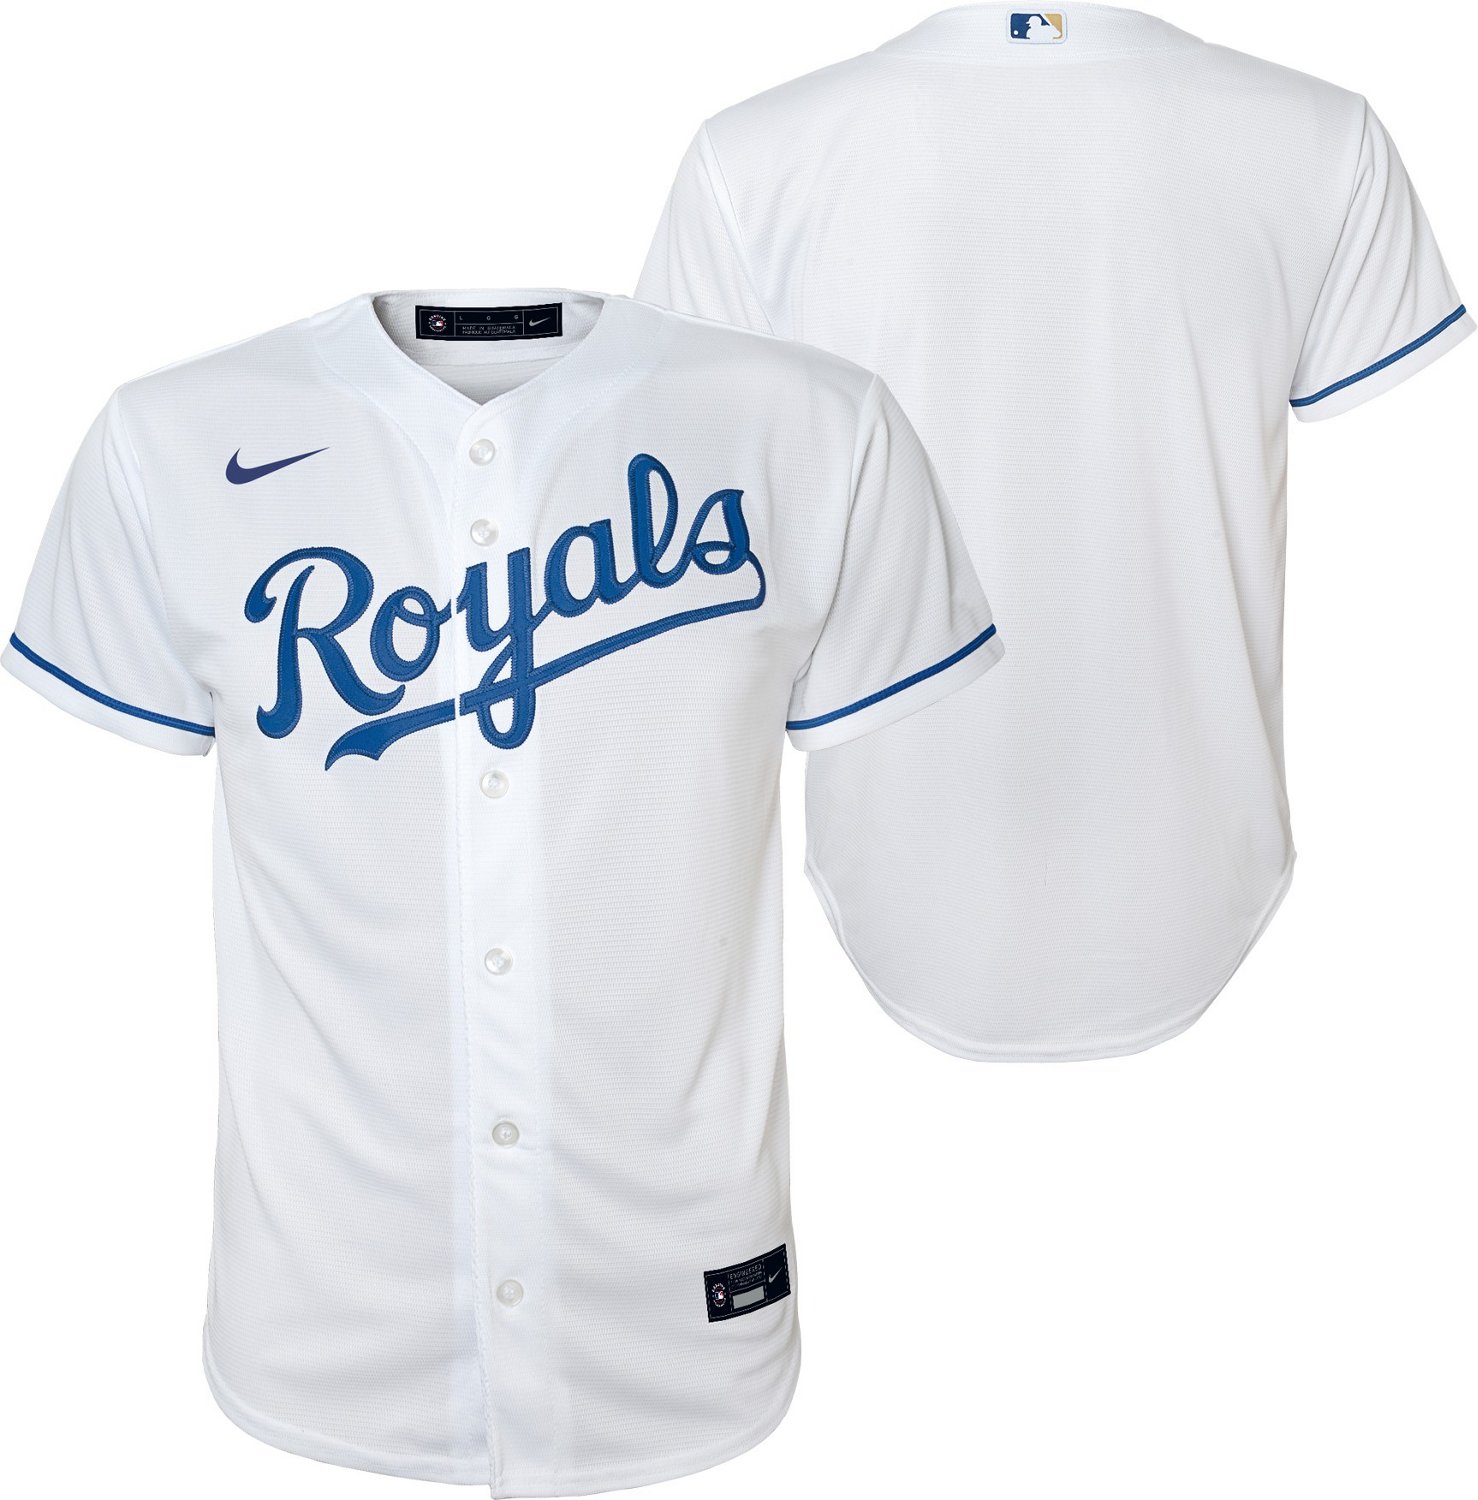 Kansas City Royals Youth White Home Baseball Jersey